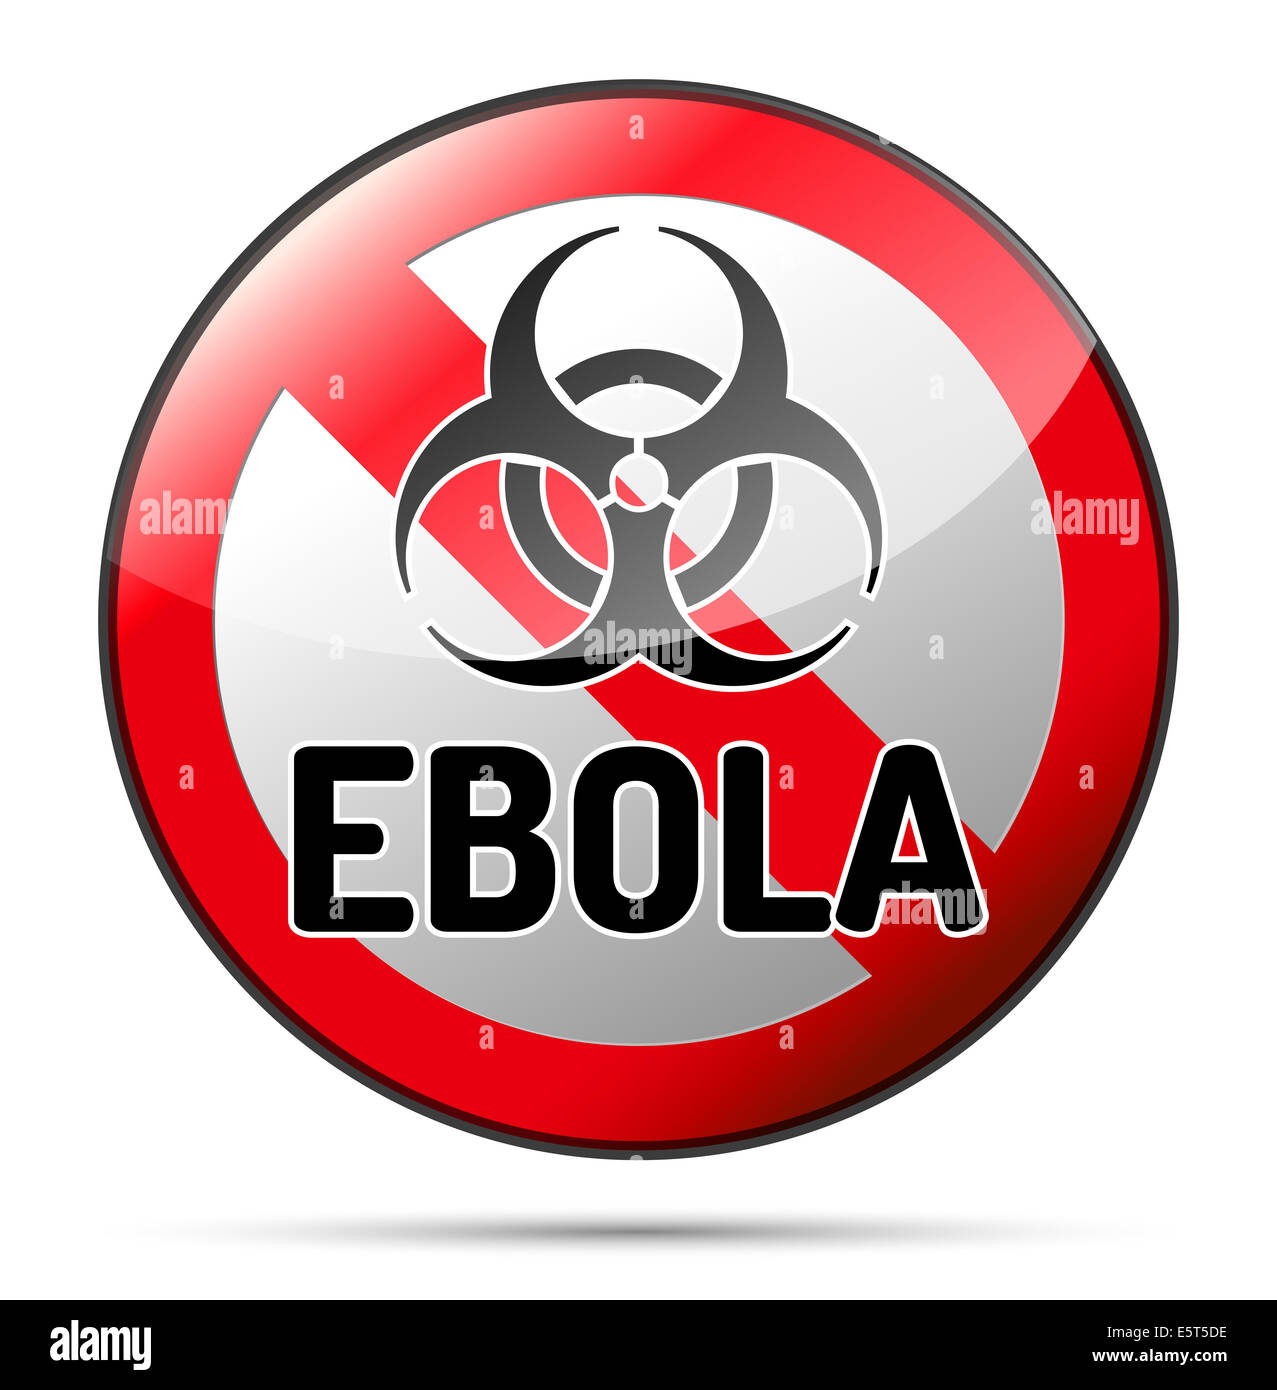 Ebola Biohazard virus danger sign with reflect and shadow on white background. Isolated warning symbol. Stock Photo